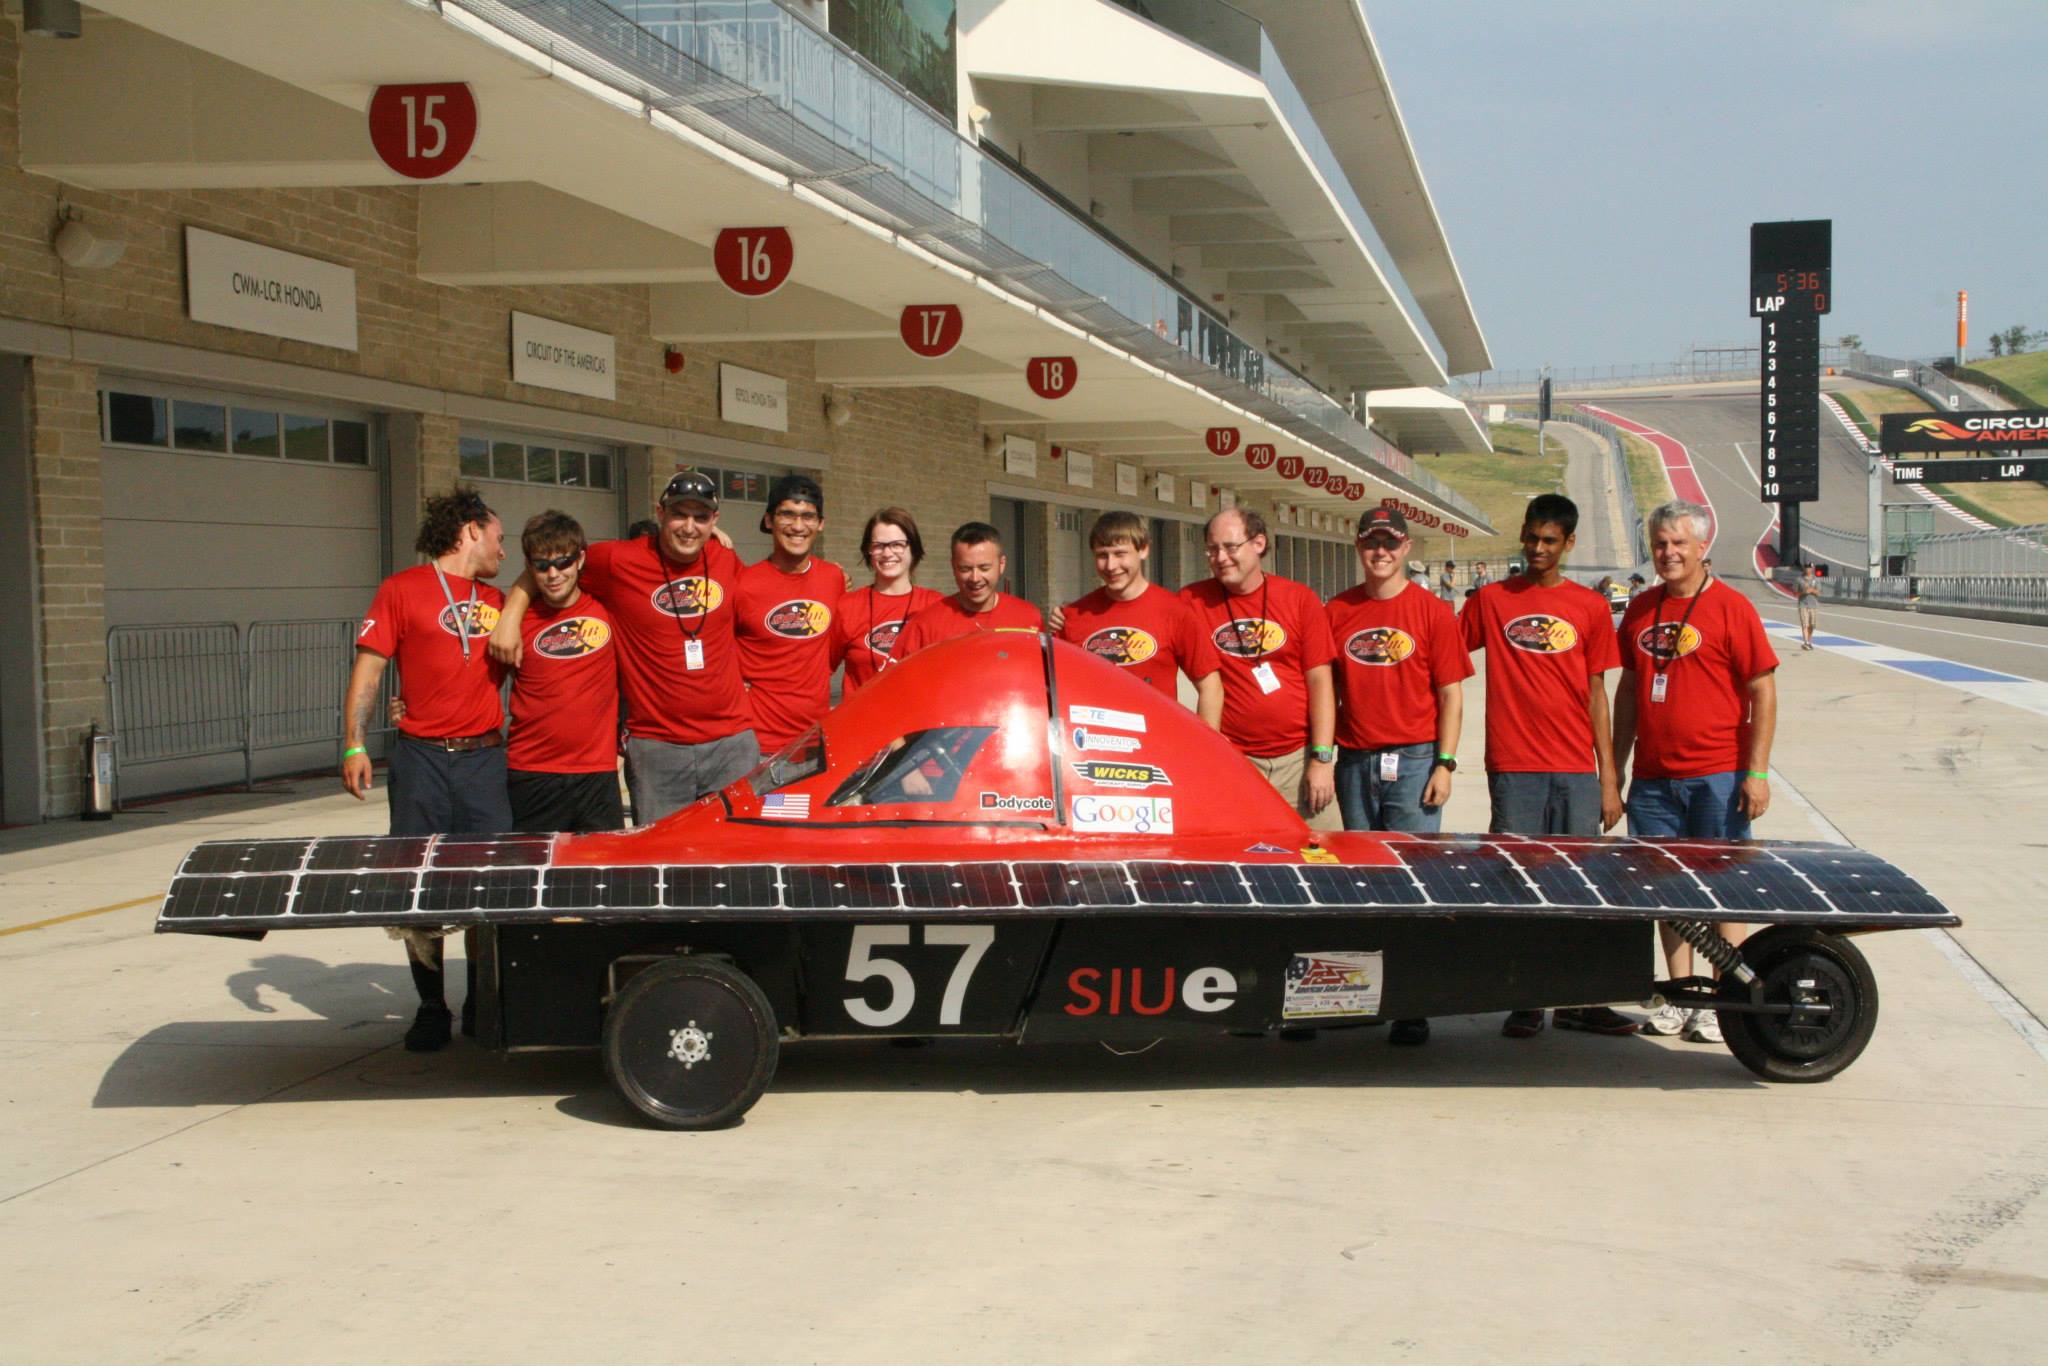 SIUE solar car 2015